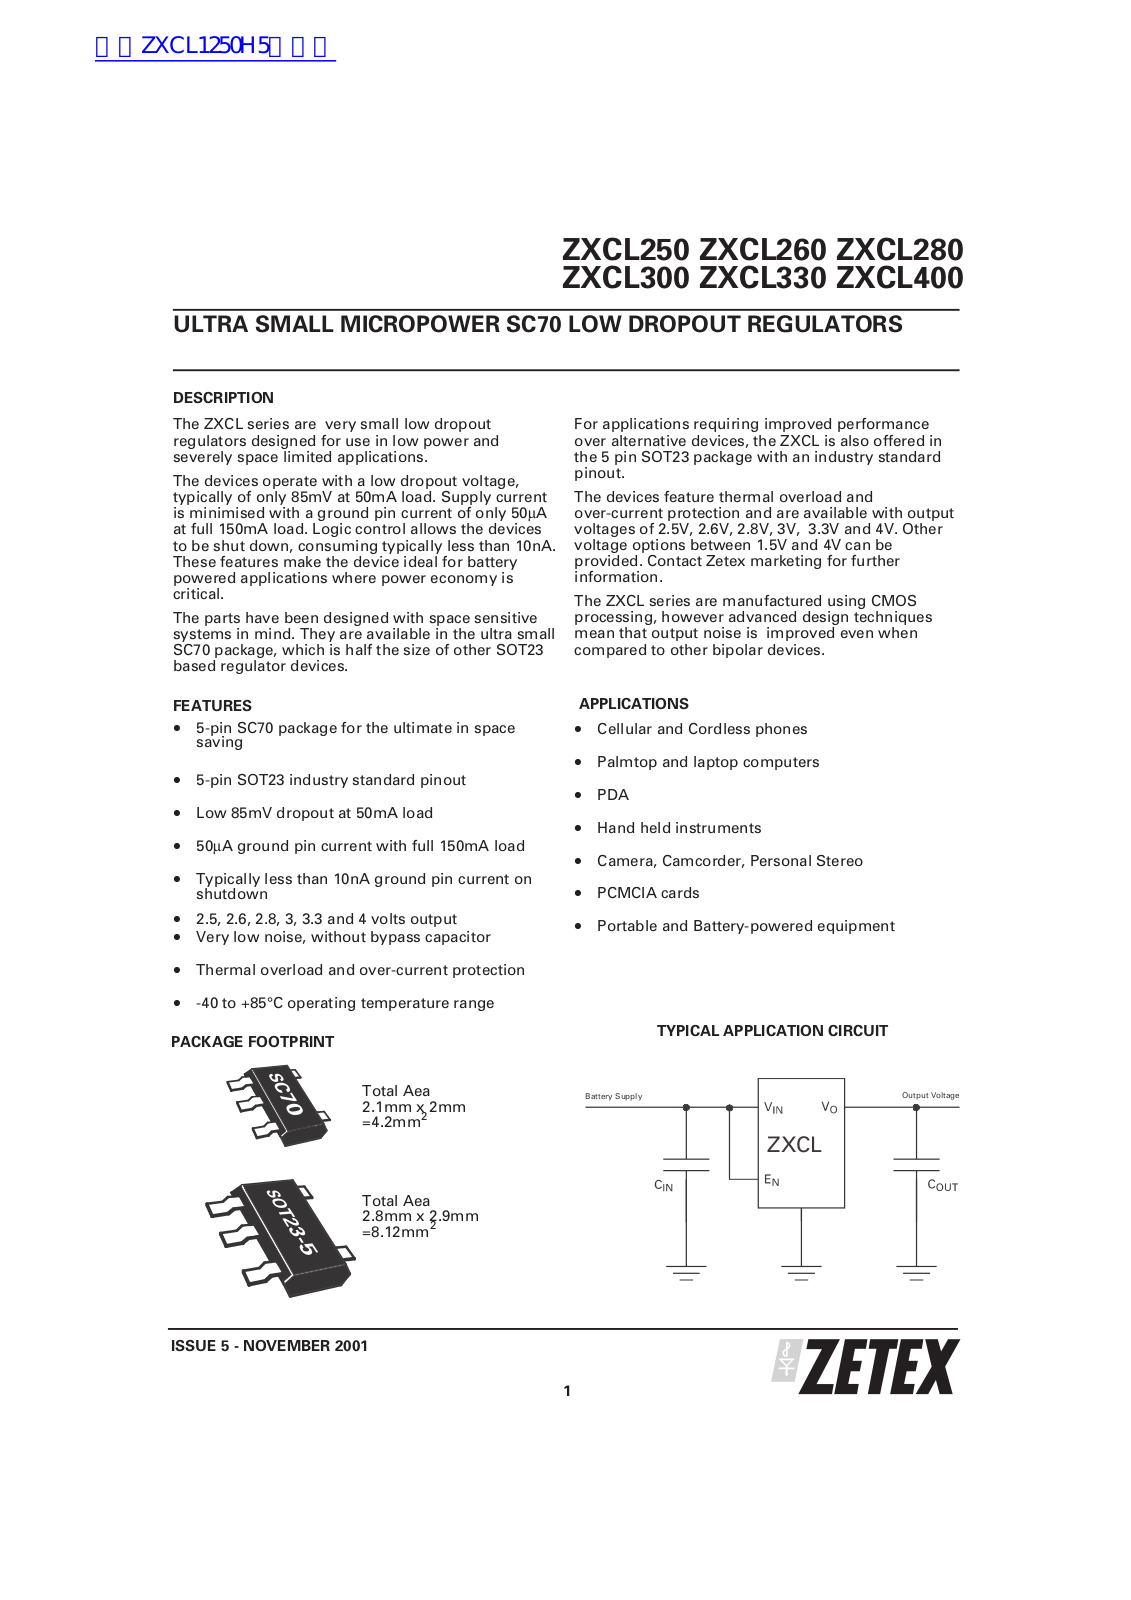 ZETEX ZXCL250, ZXCL260, ZXCL280, ZXCL300, ZXCL330 Technical data